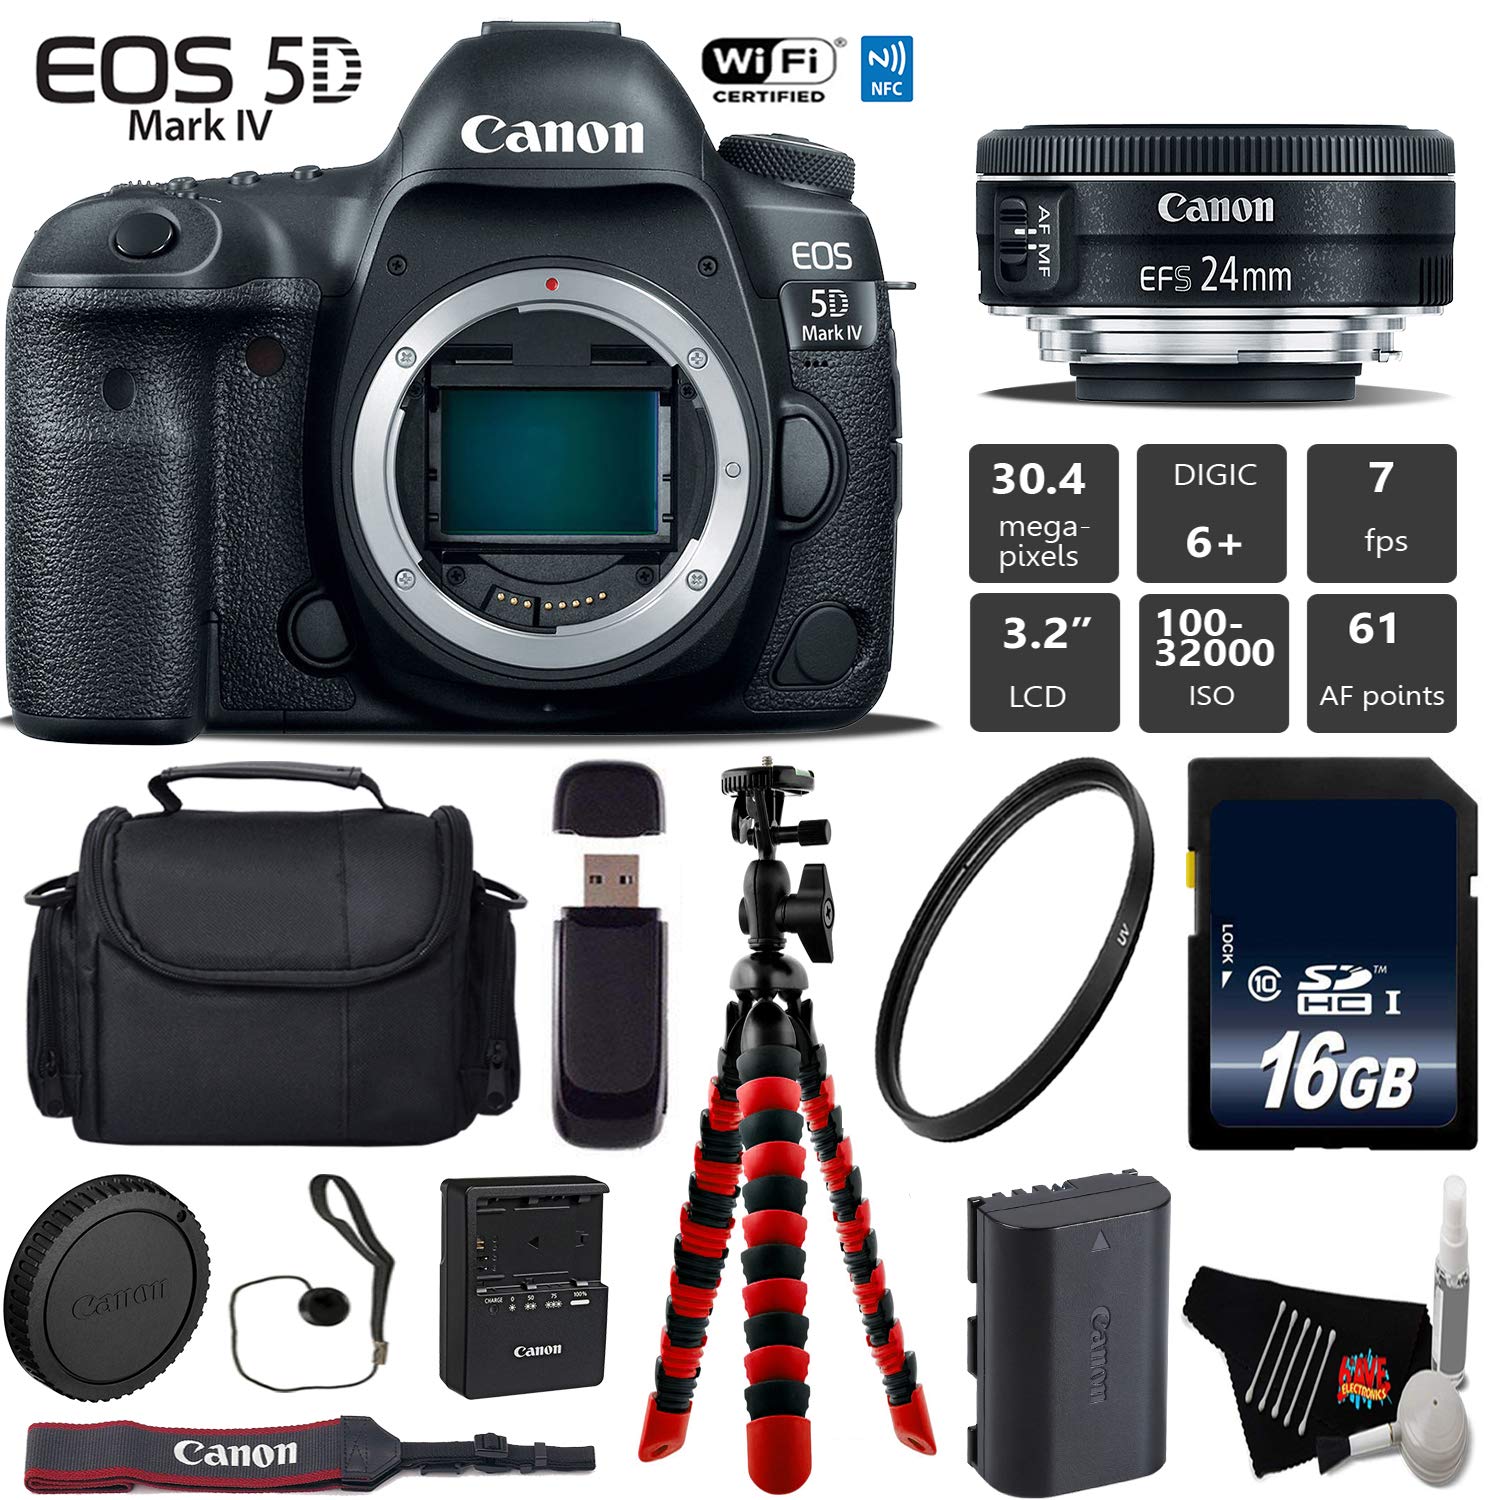 Canon EOS 5D Mark IV DSLR Camera with 24mm f/2.8 STM Lens + Wireless Remote + UV Protection Filter + Case + Wrist Strap Base Bundle